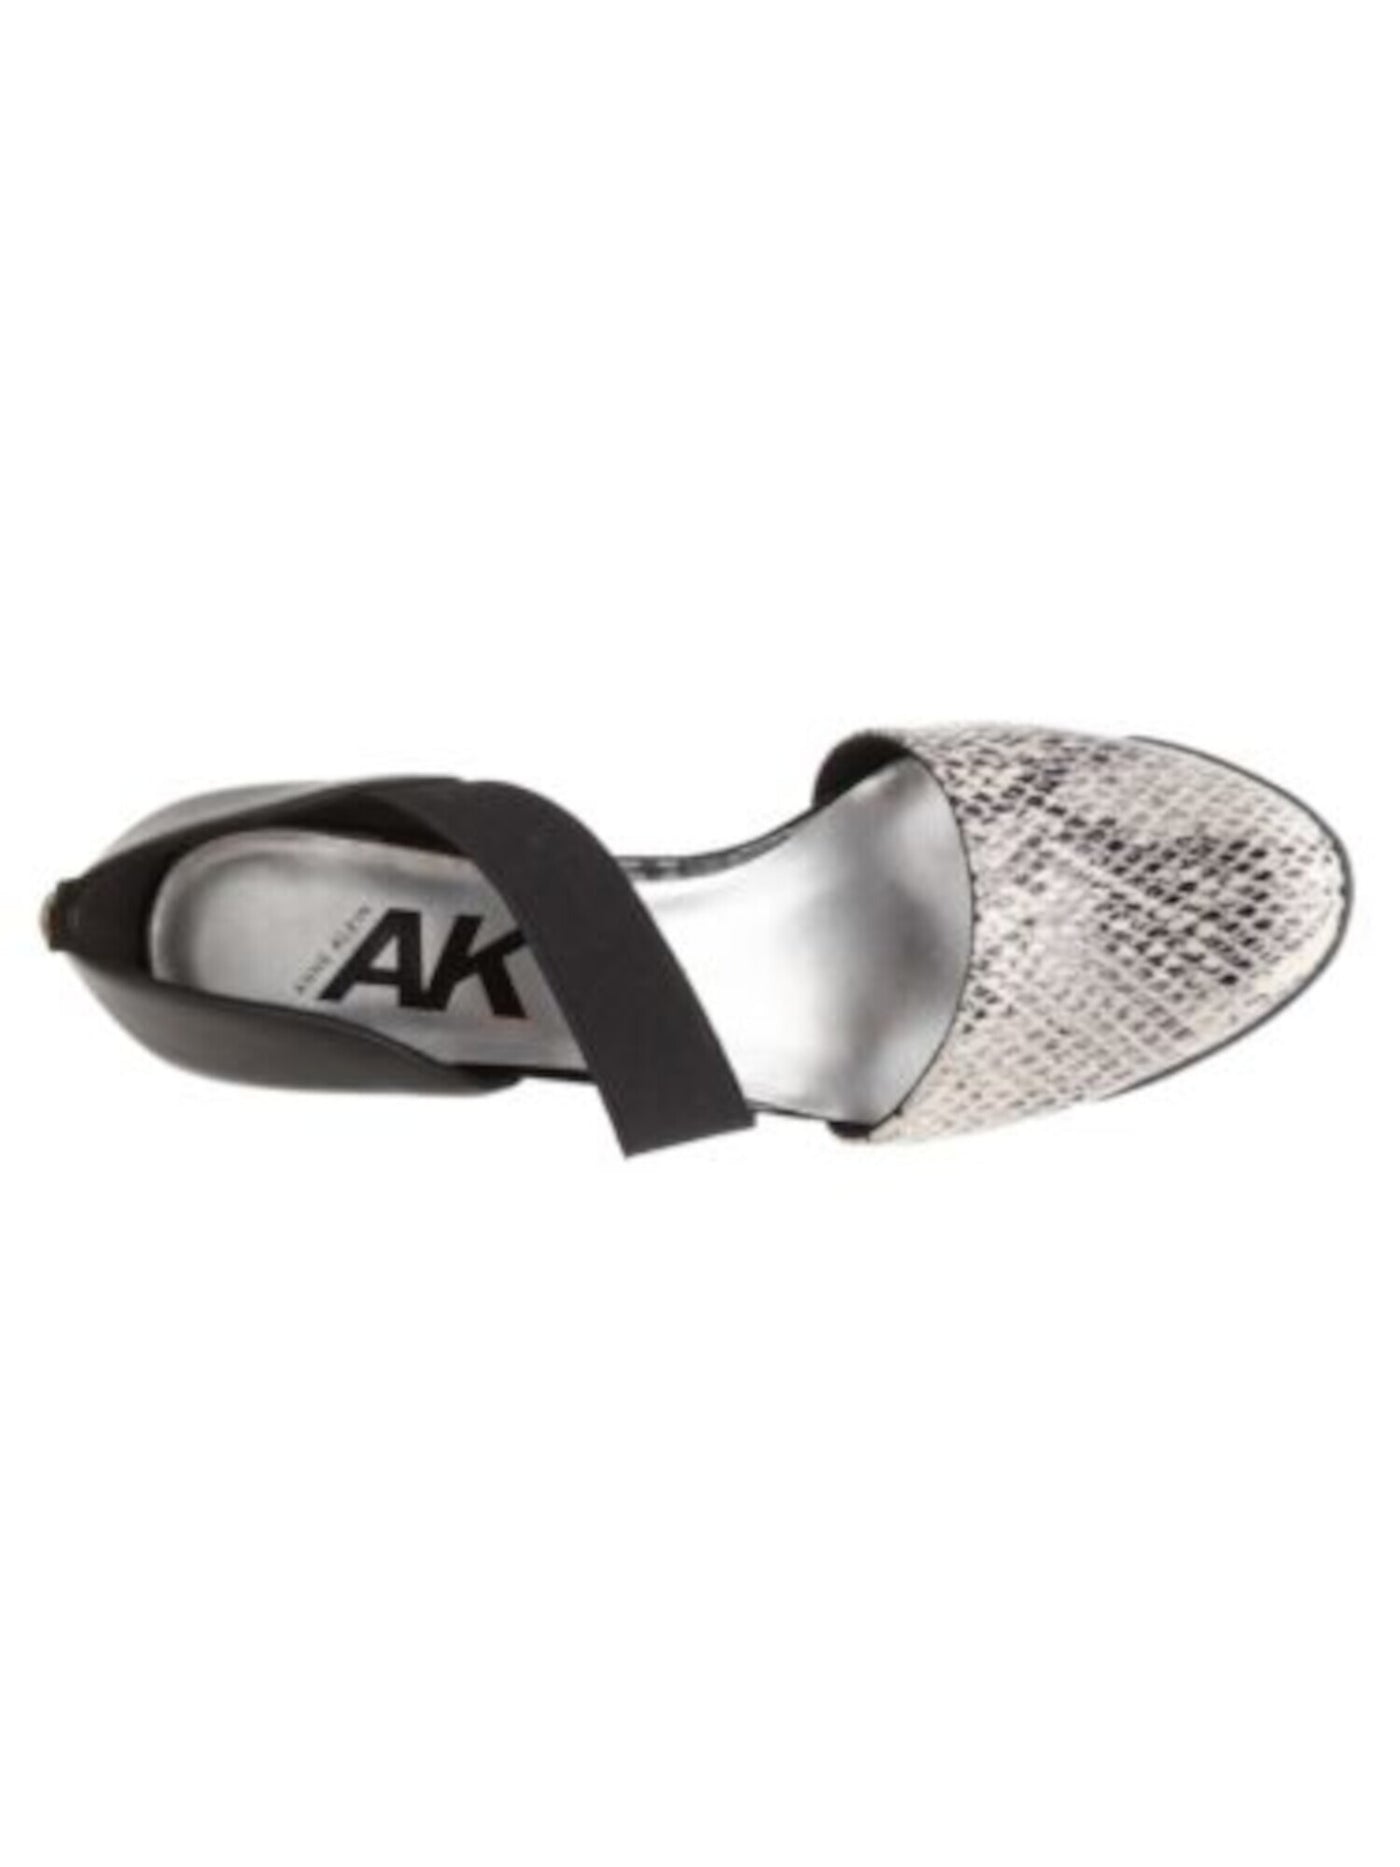 AK SPORT Womens Black Snake Stretch Asymmetrical Cushioned Tara Almond Toe Wedge Slip On Pumps Shoes M